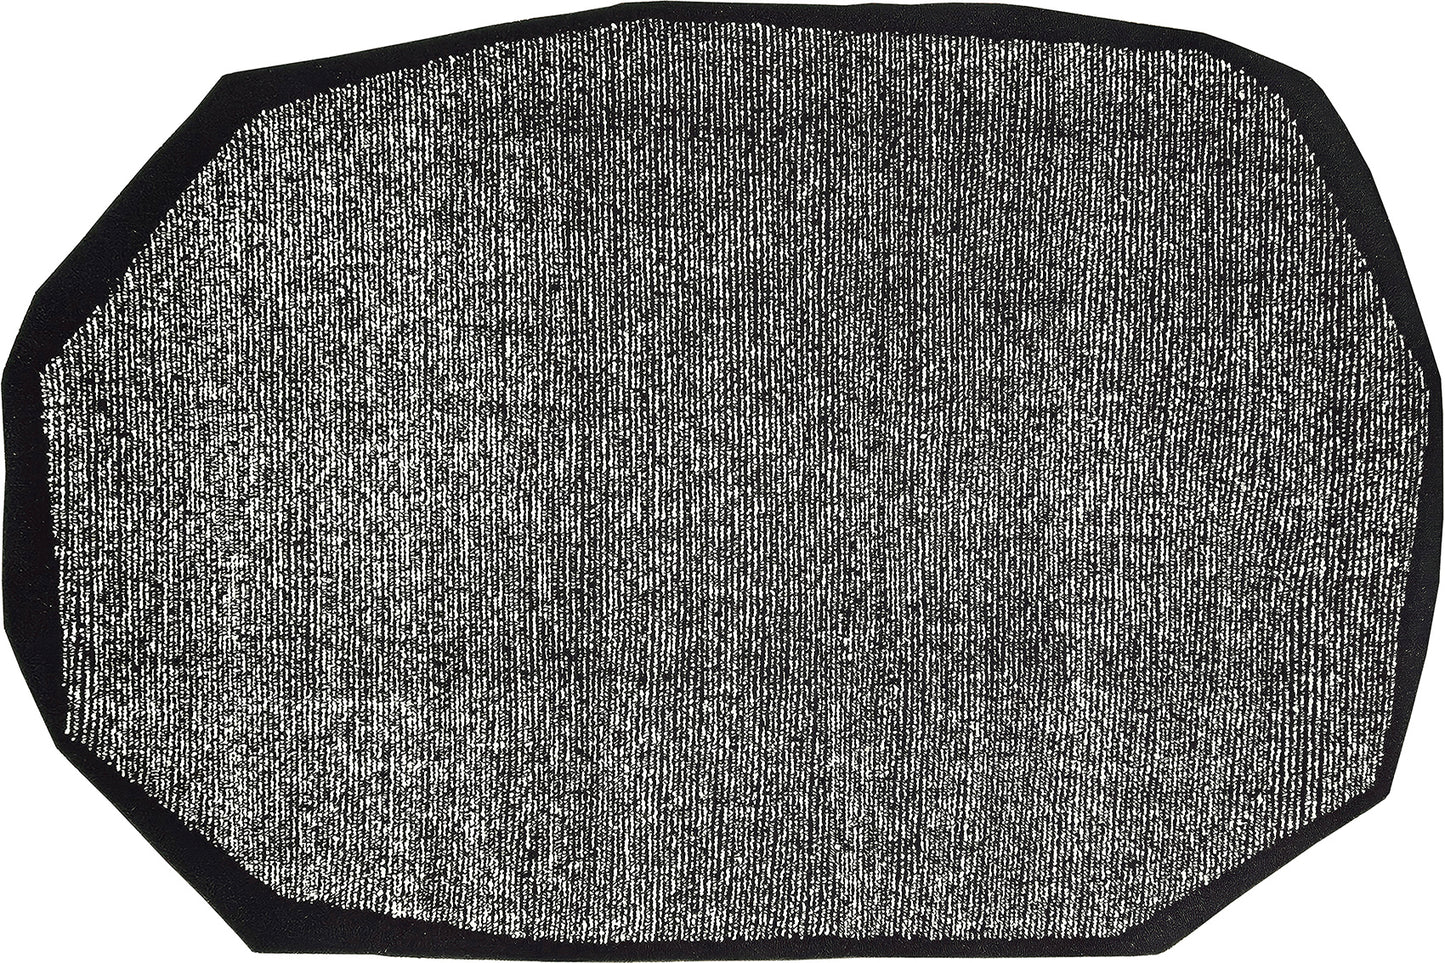 Cocoon II black and white rug